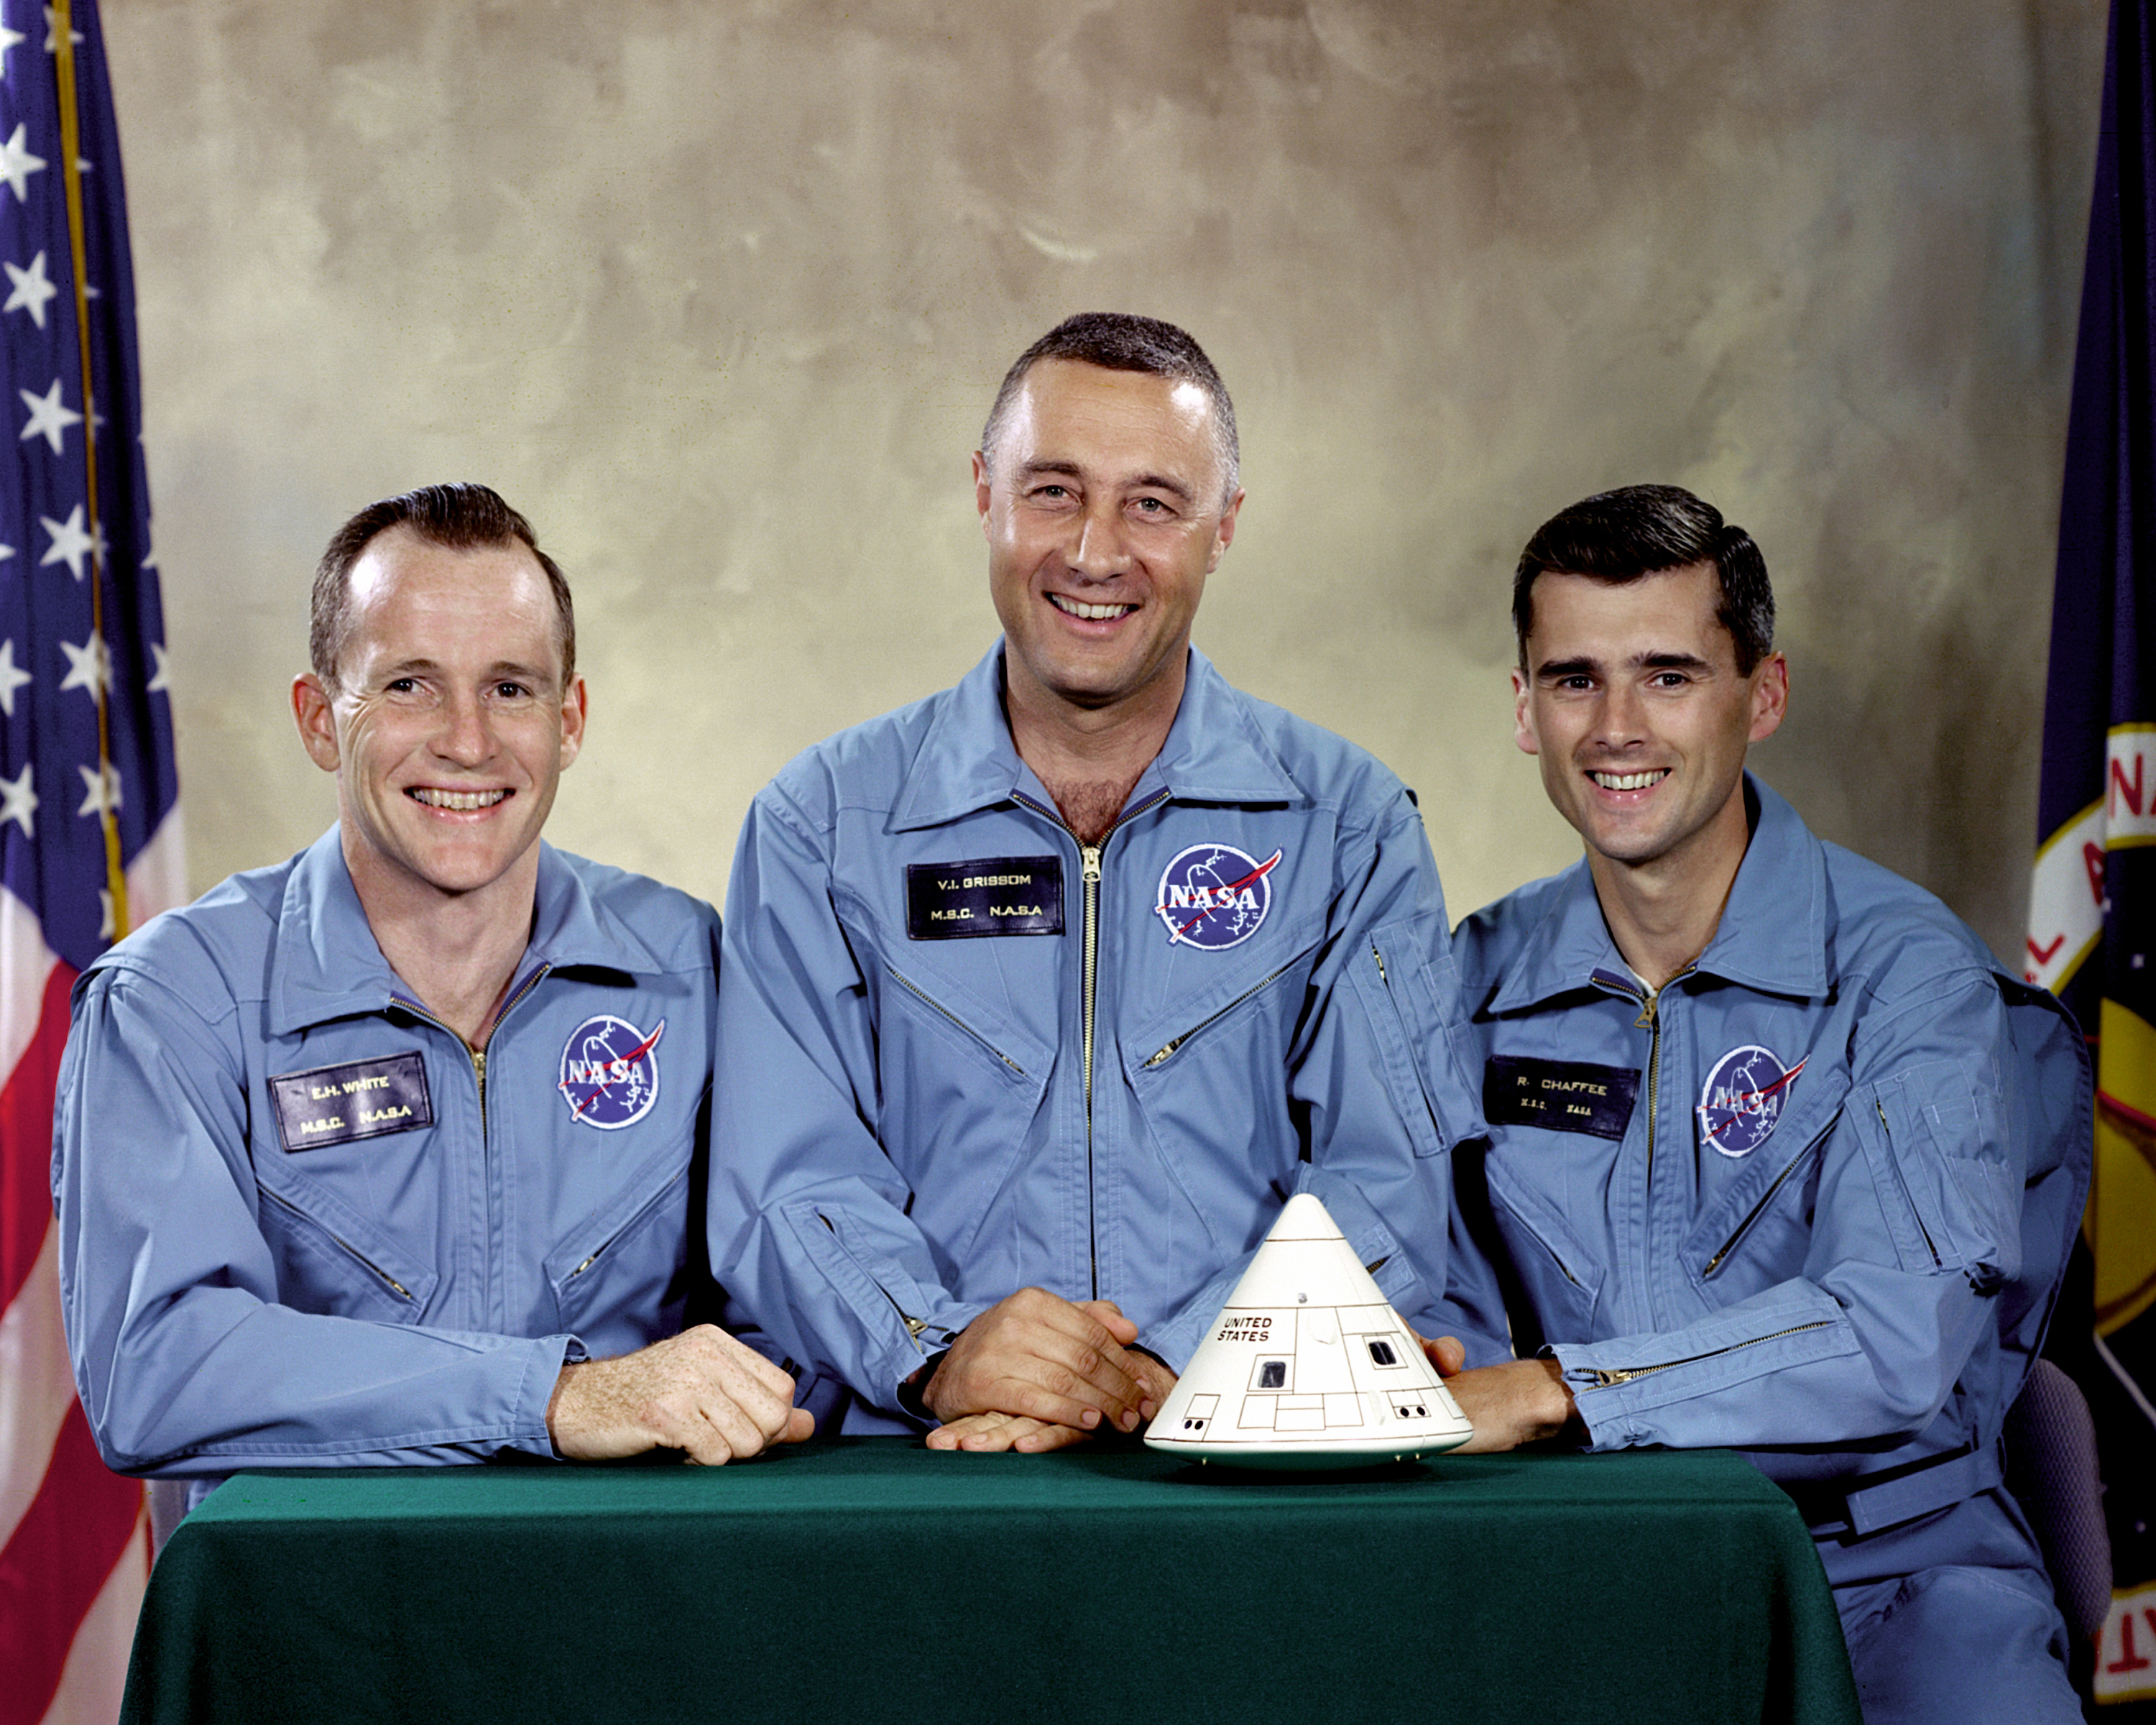 Official portrait of Apollo 1 crew